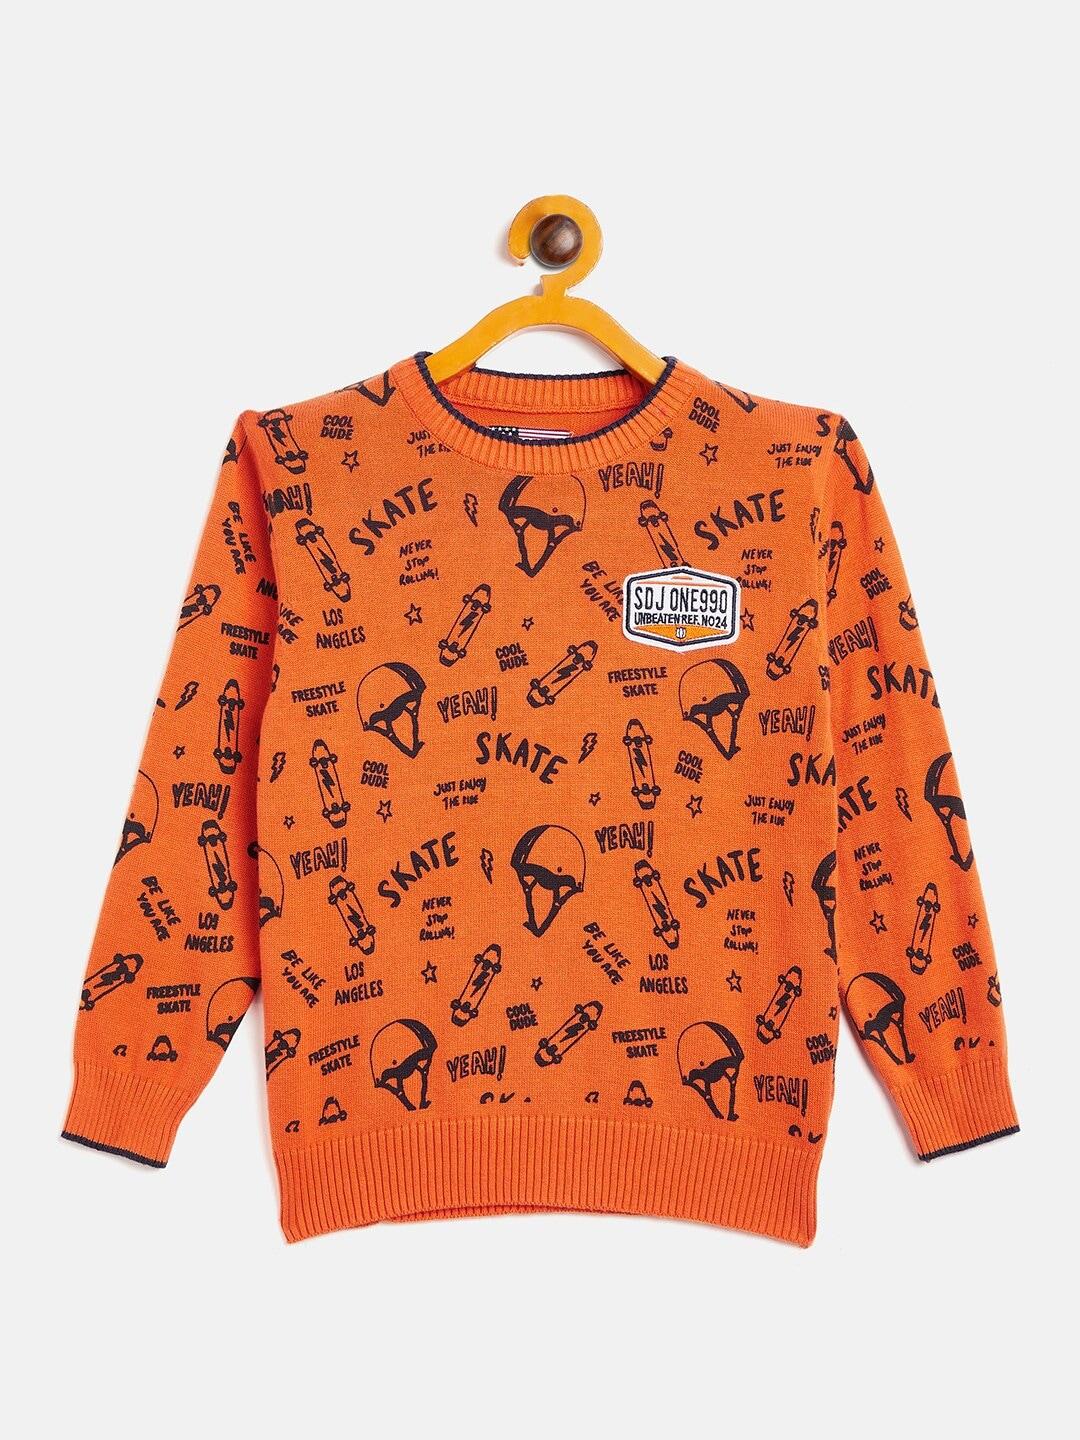 Duke Boys Orange & Navy Blue Acrylic Printed Pullover Sweater